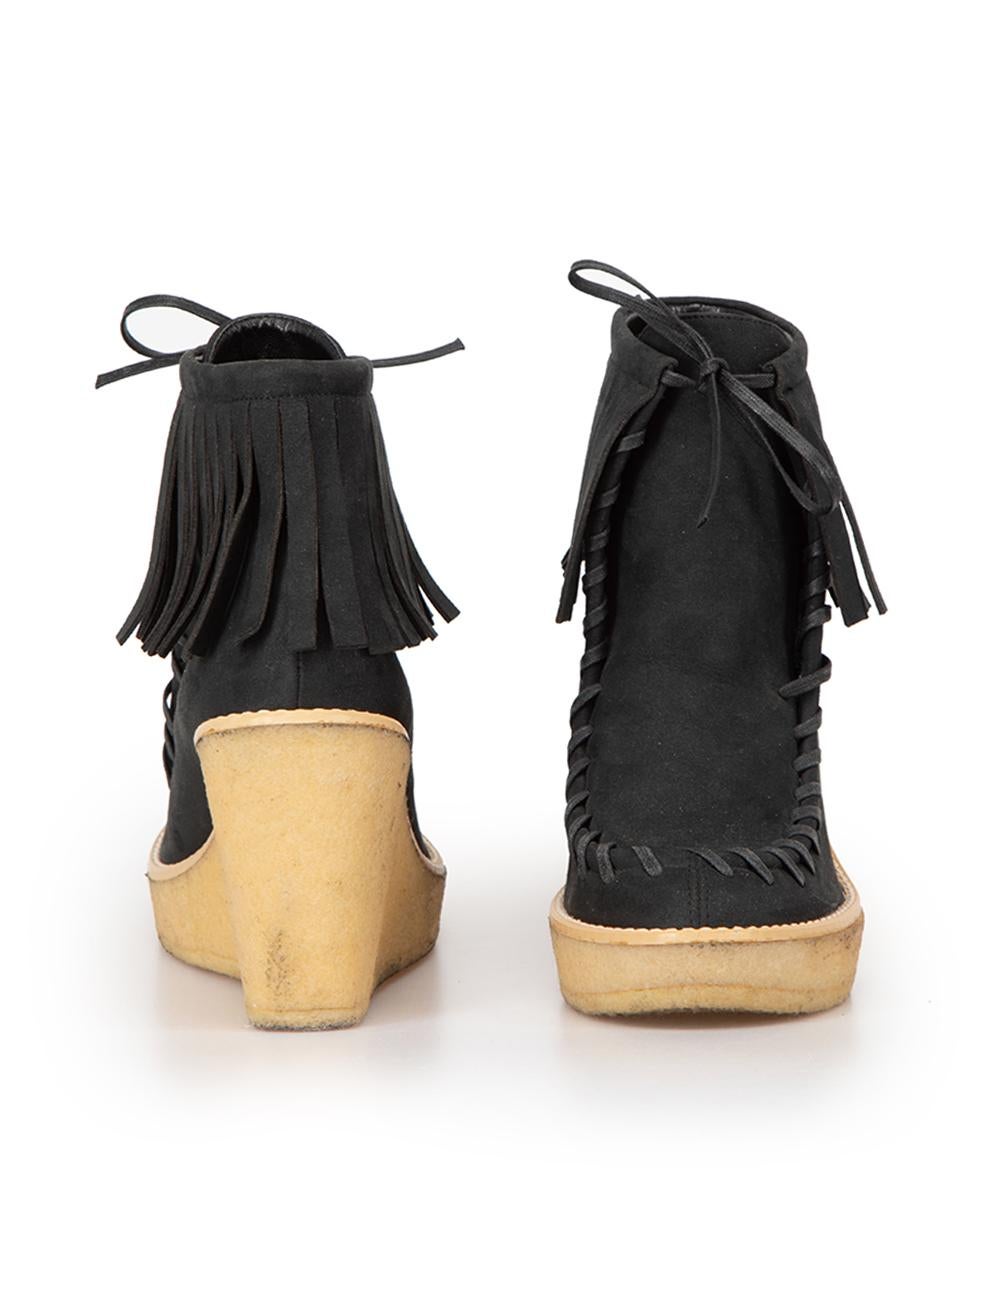 Stella McCartney Women's Black Vegan Suede Tassel Wedge Boots In Good Condition For Sale In London, GB